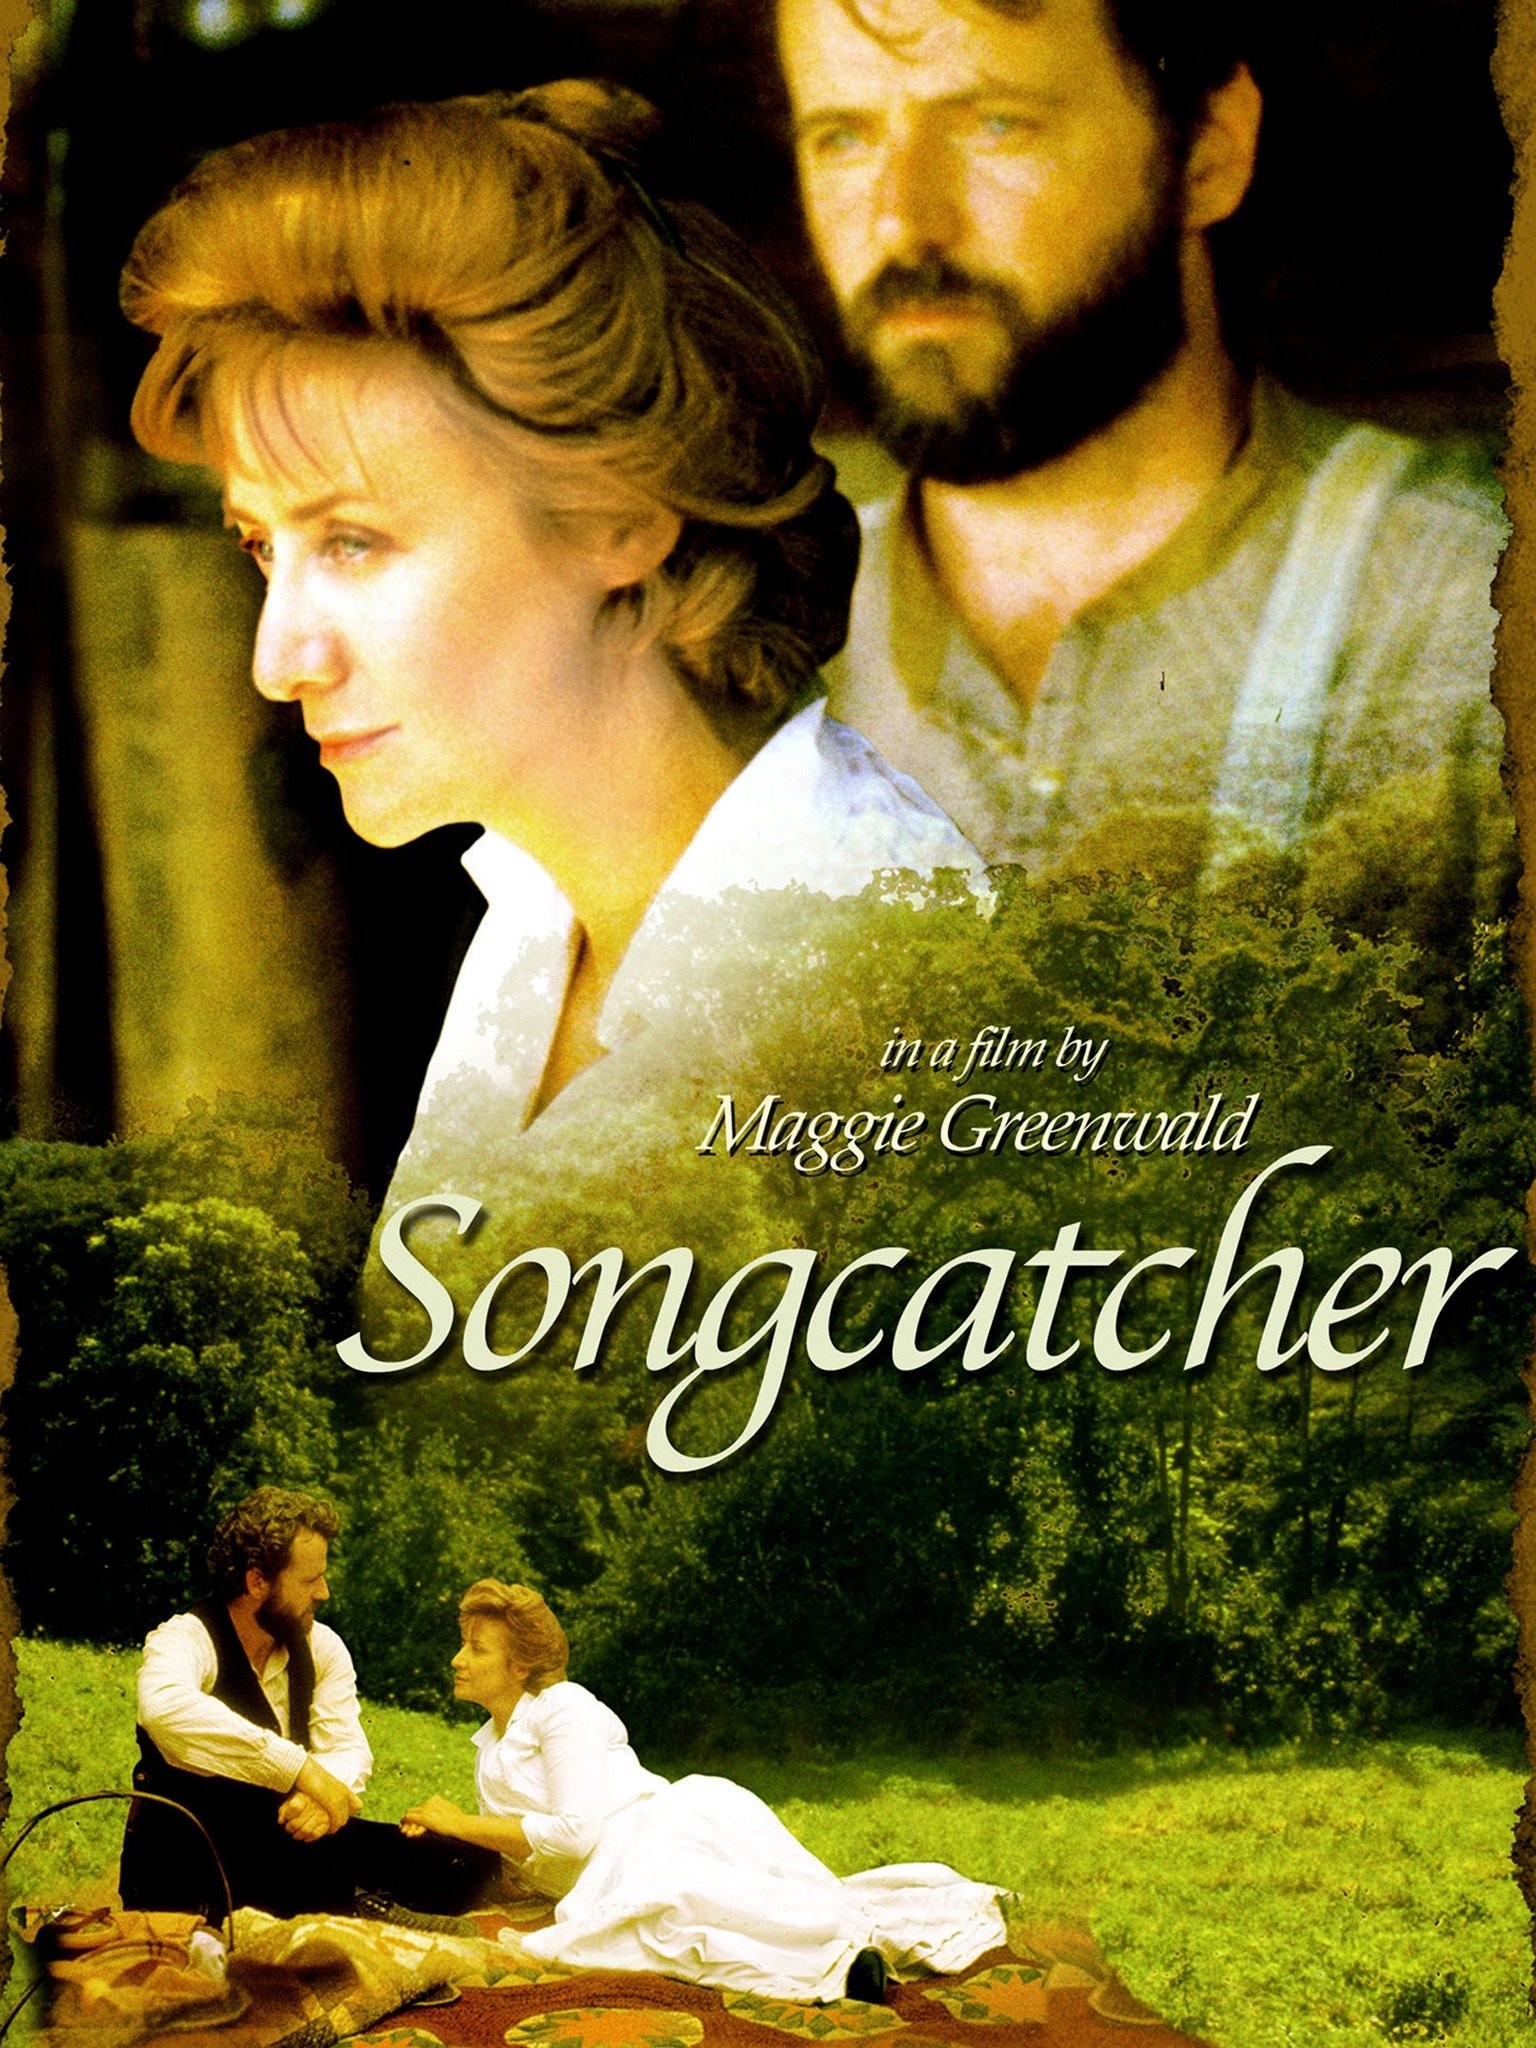 Songcatcher - Rotten Tomatoes